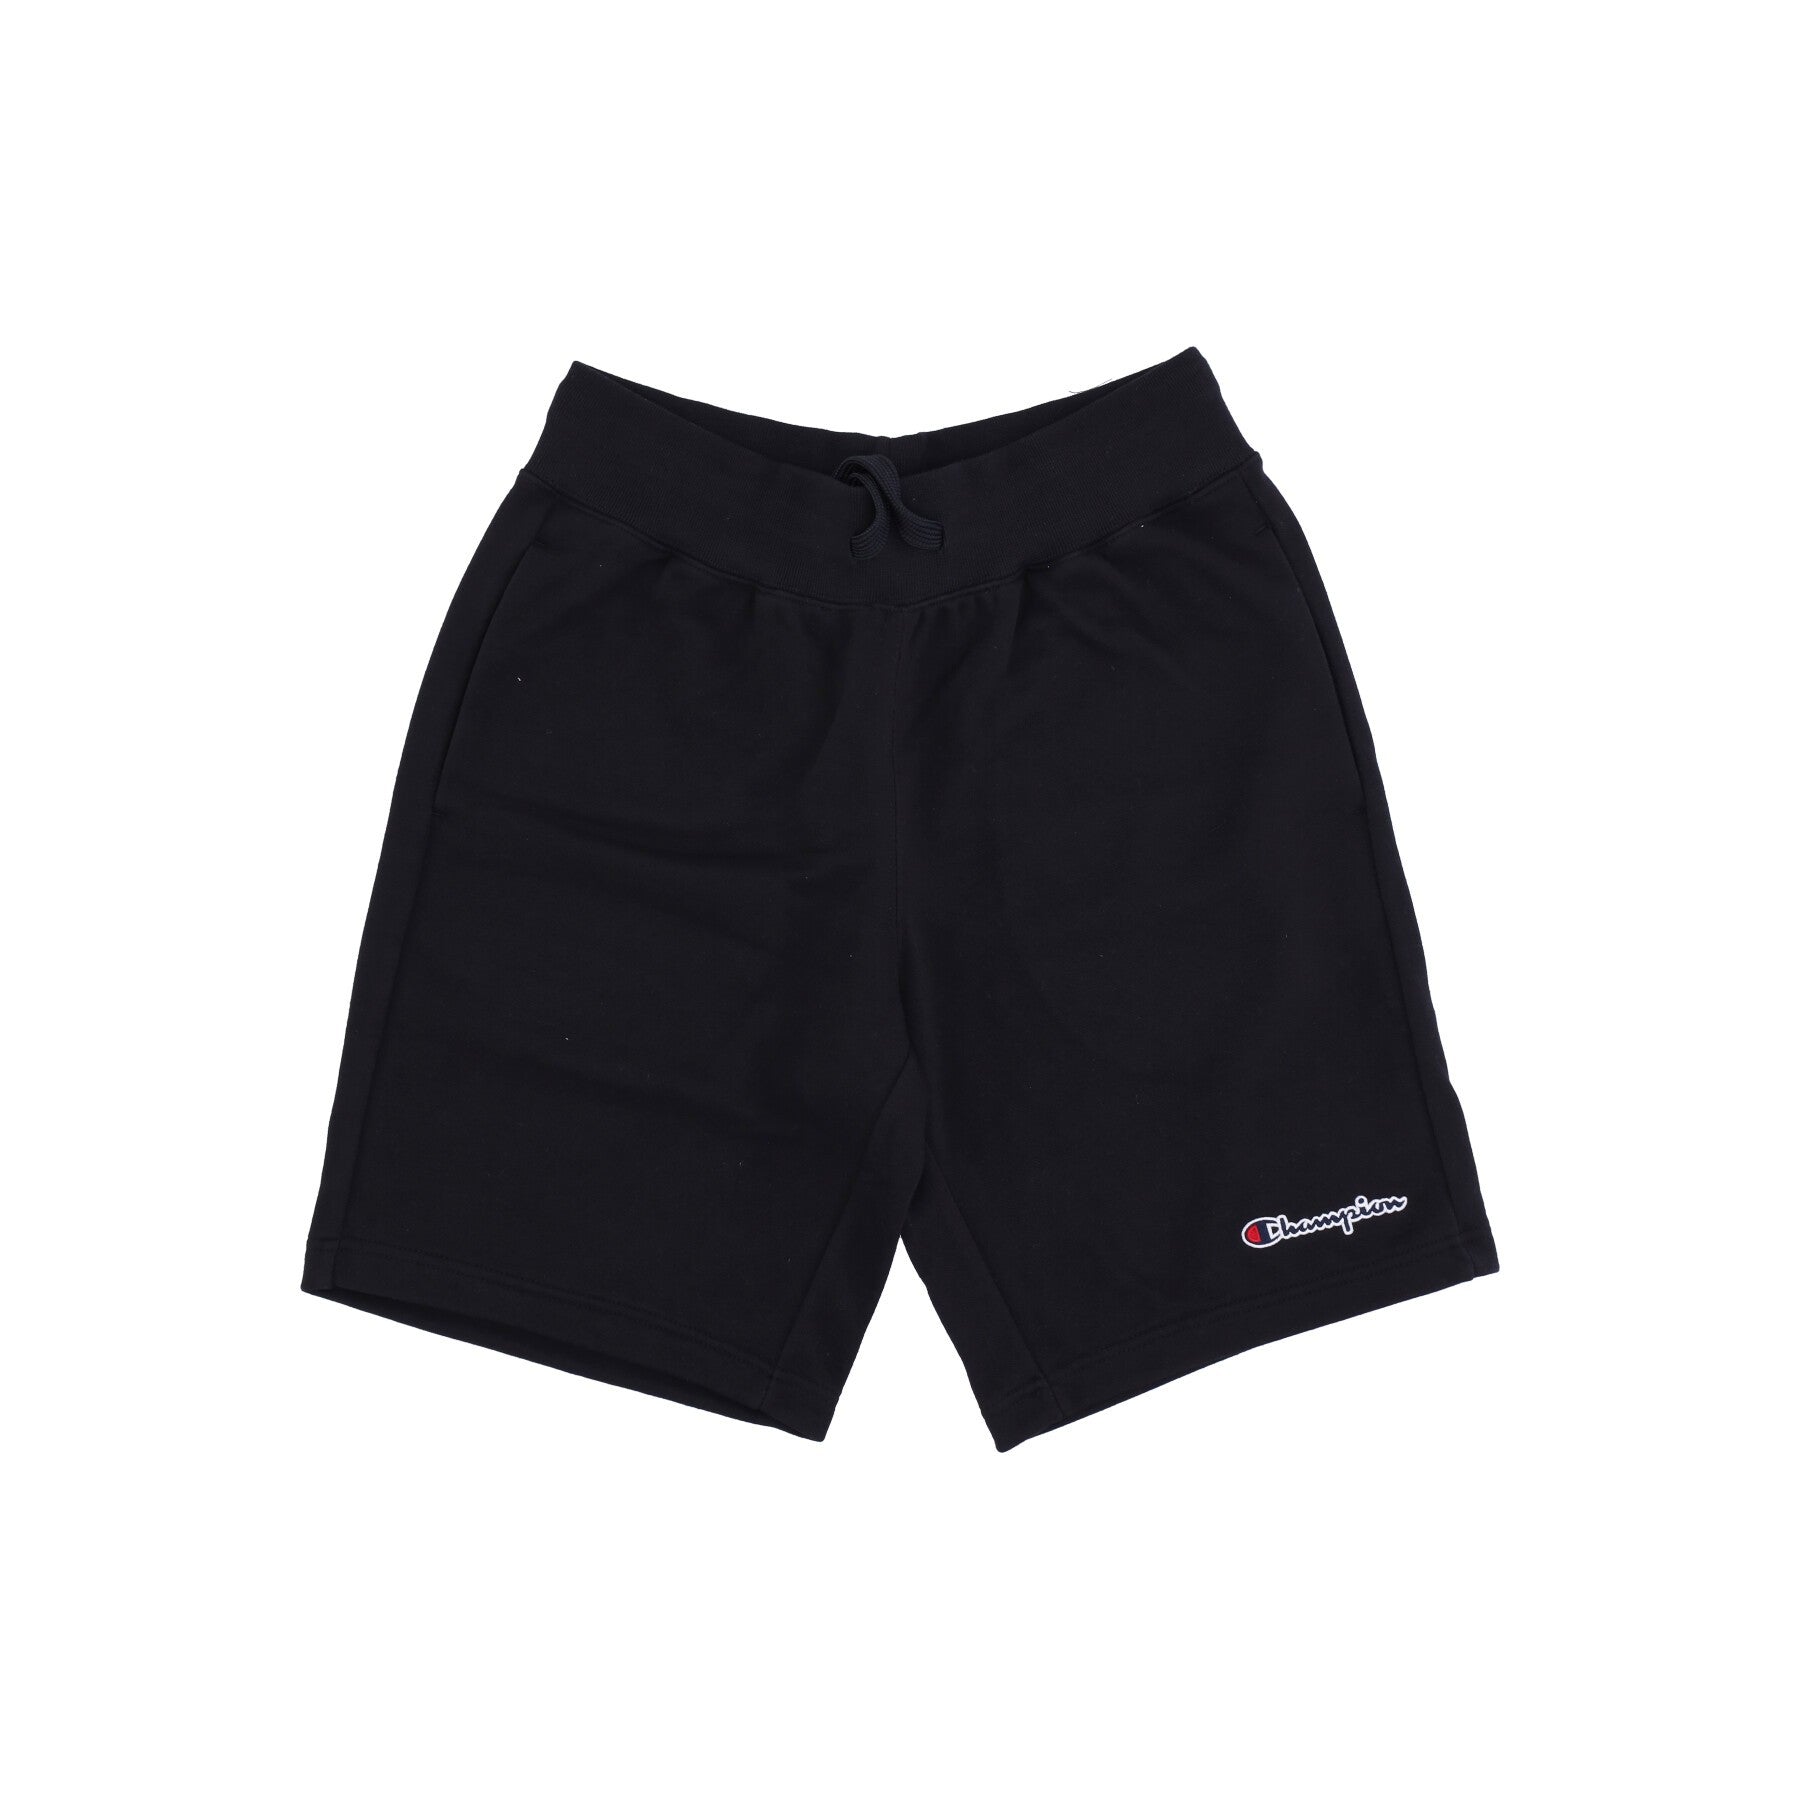 Men's Bermuda shorts